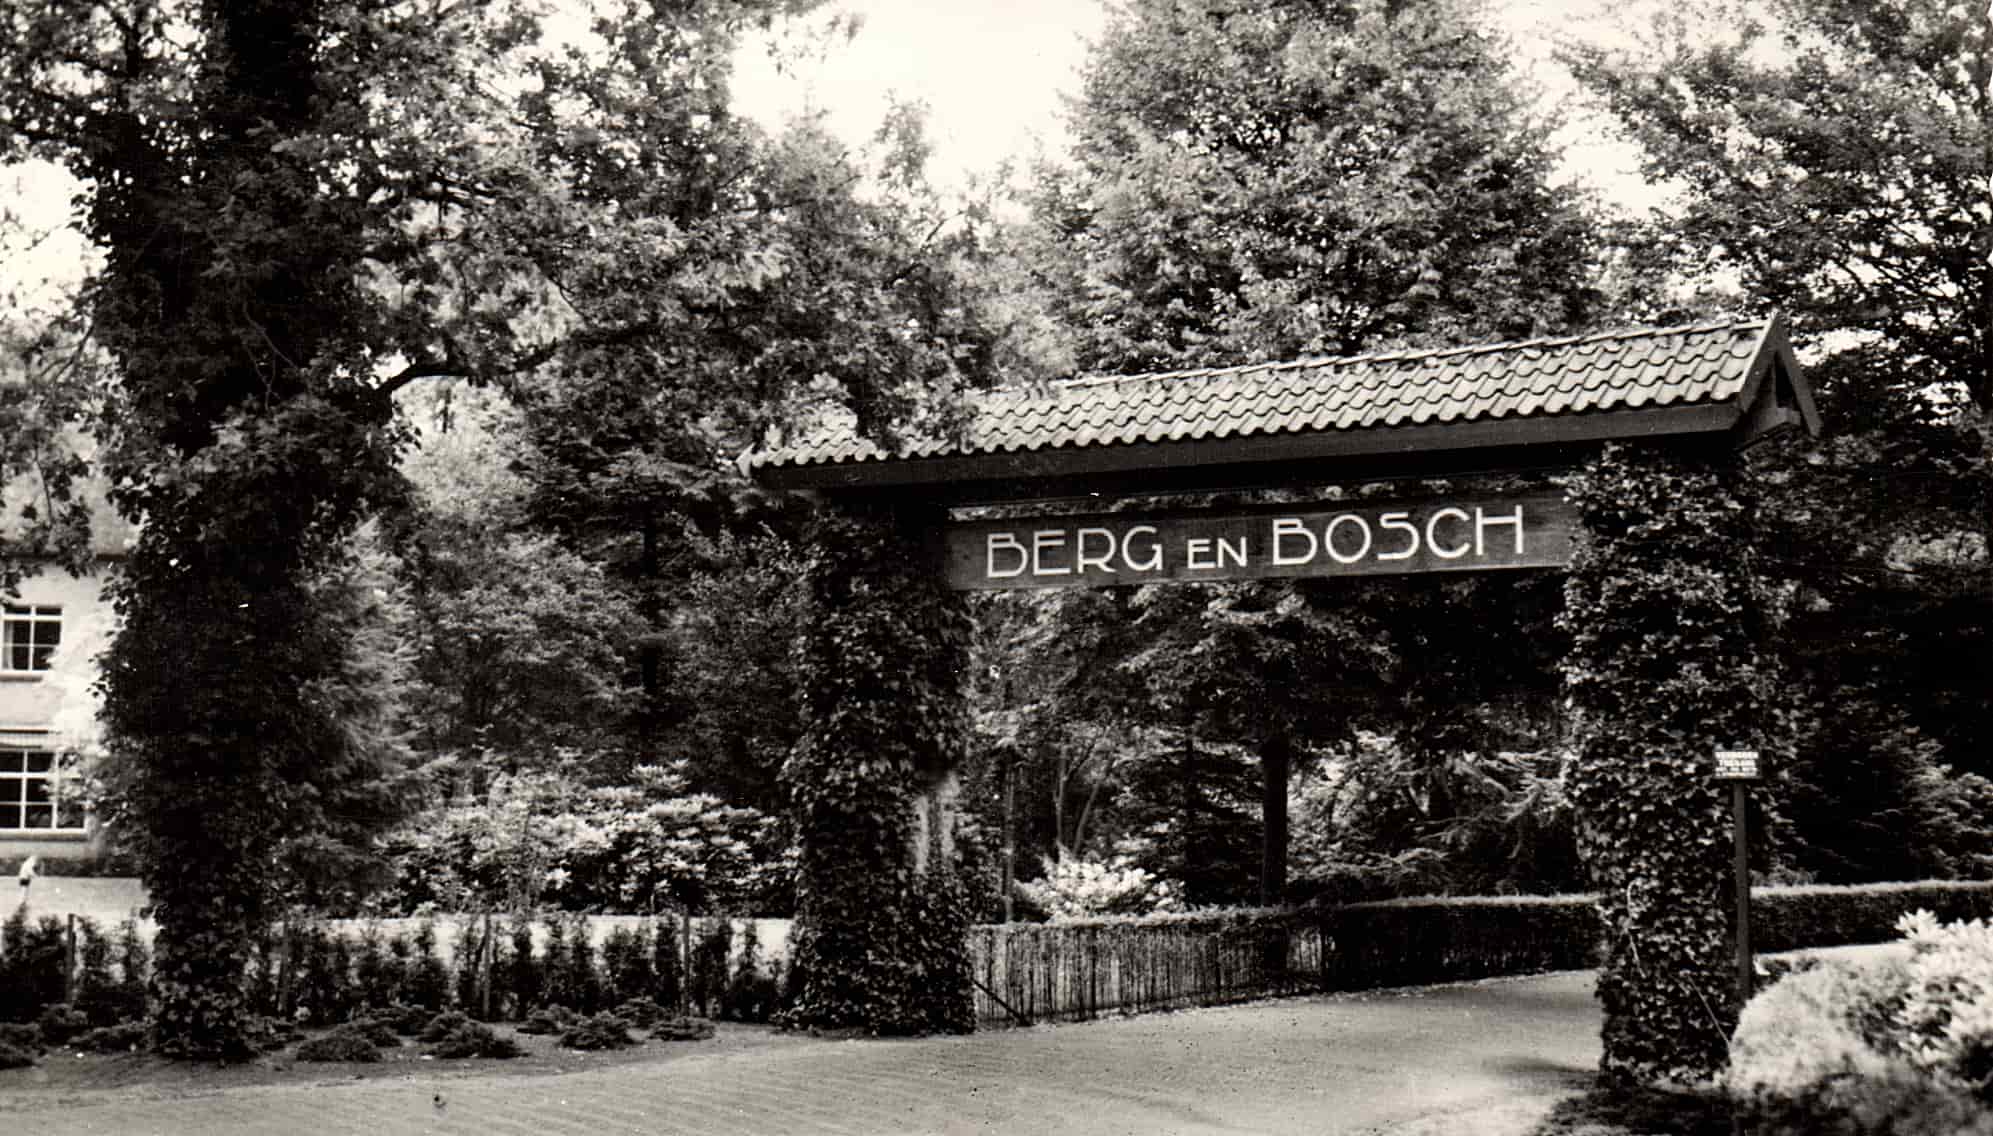 The gate of sanatorium Berg en Bosch in the town Bilthoven, near Utrecht